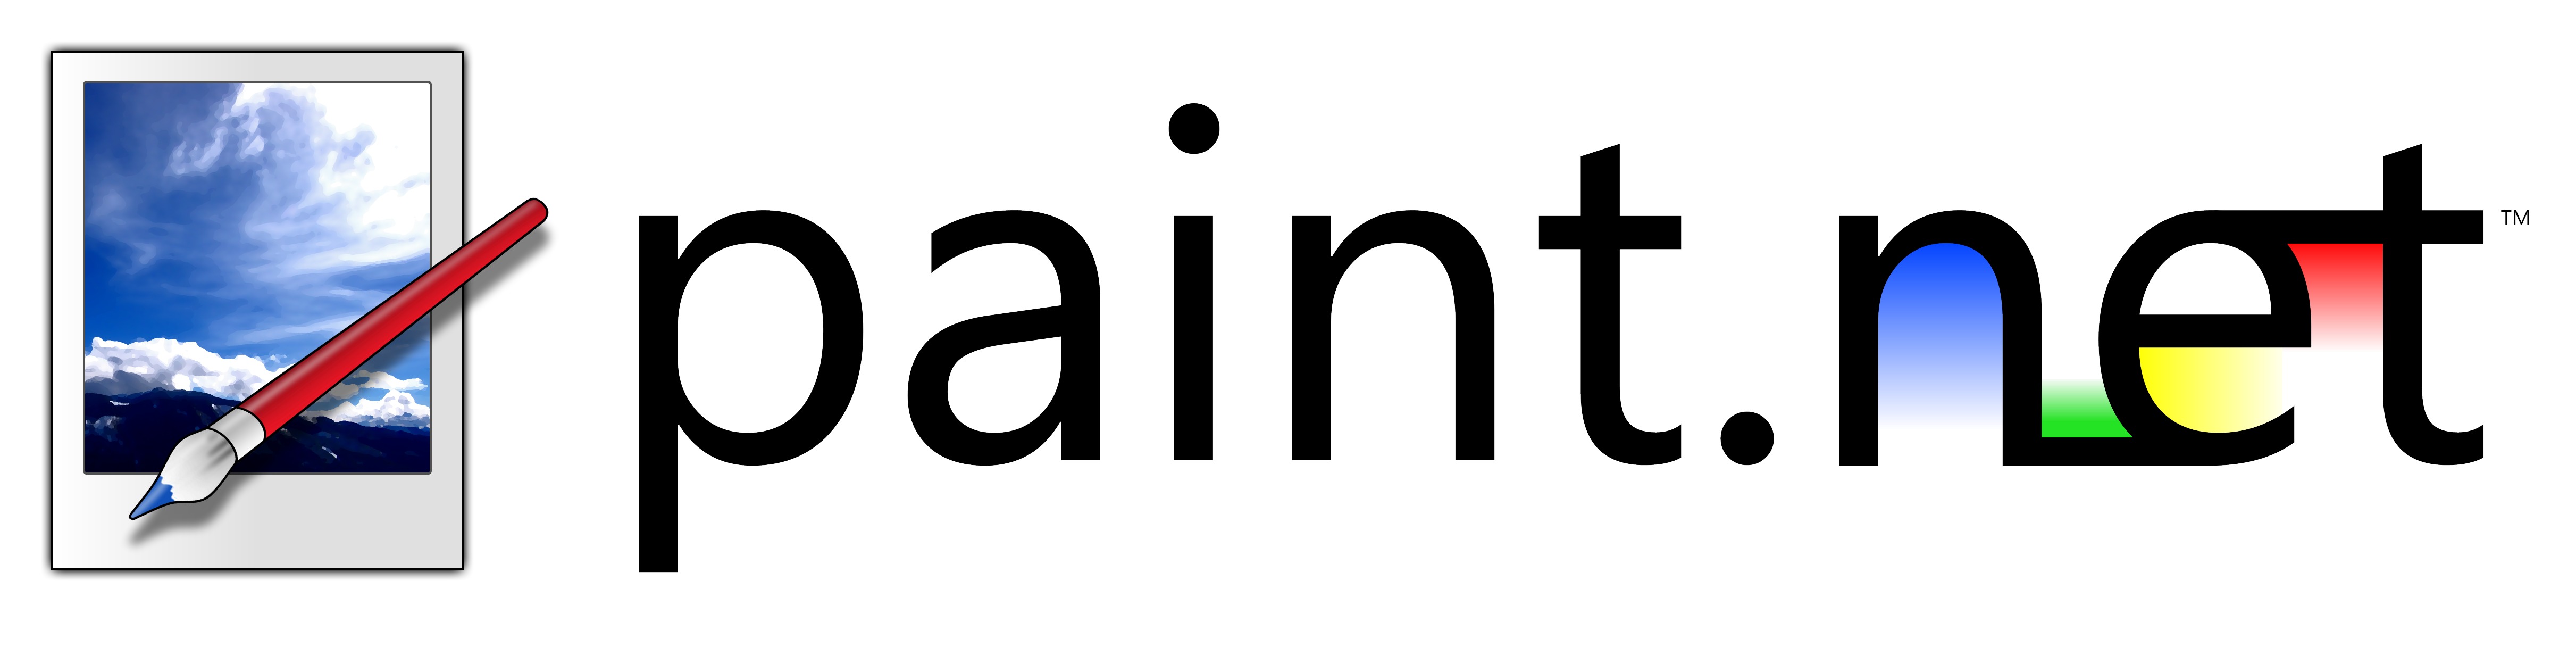 Paint.NET 5.0.7 instaling